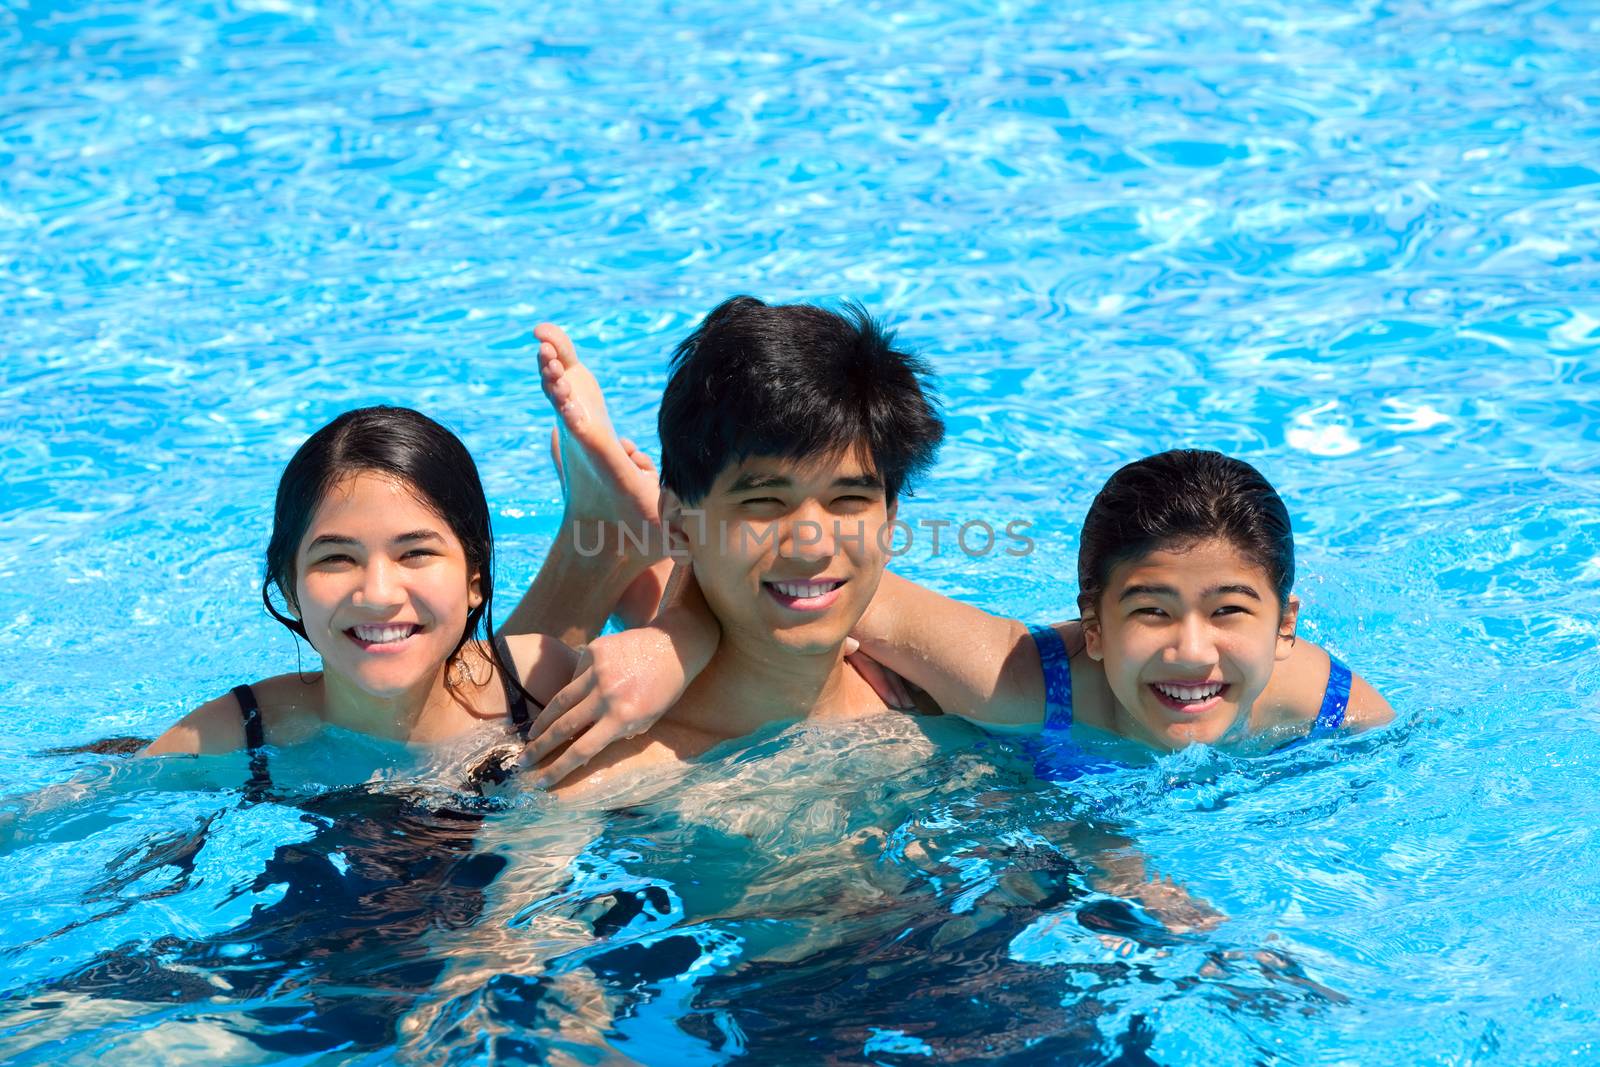 Three teen siblings smiling together in pool  by jarenwicklund